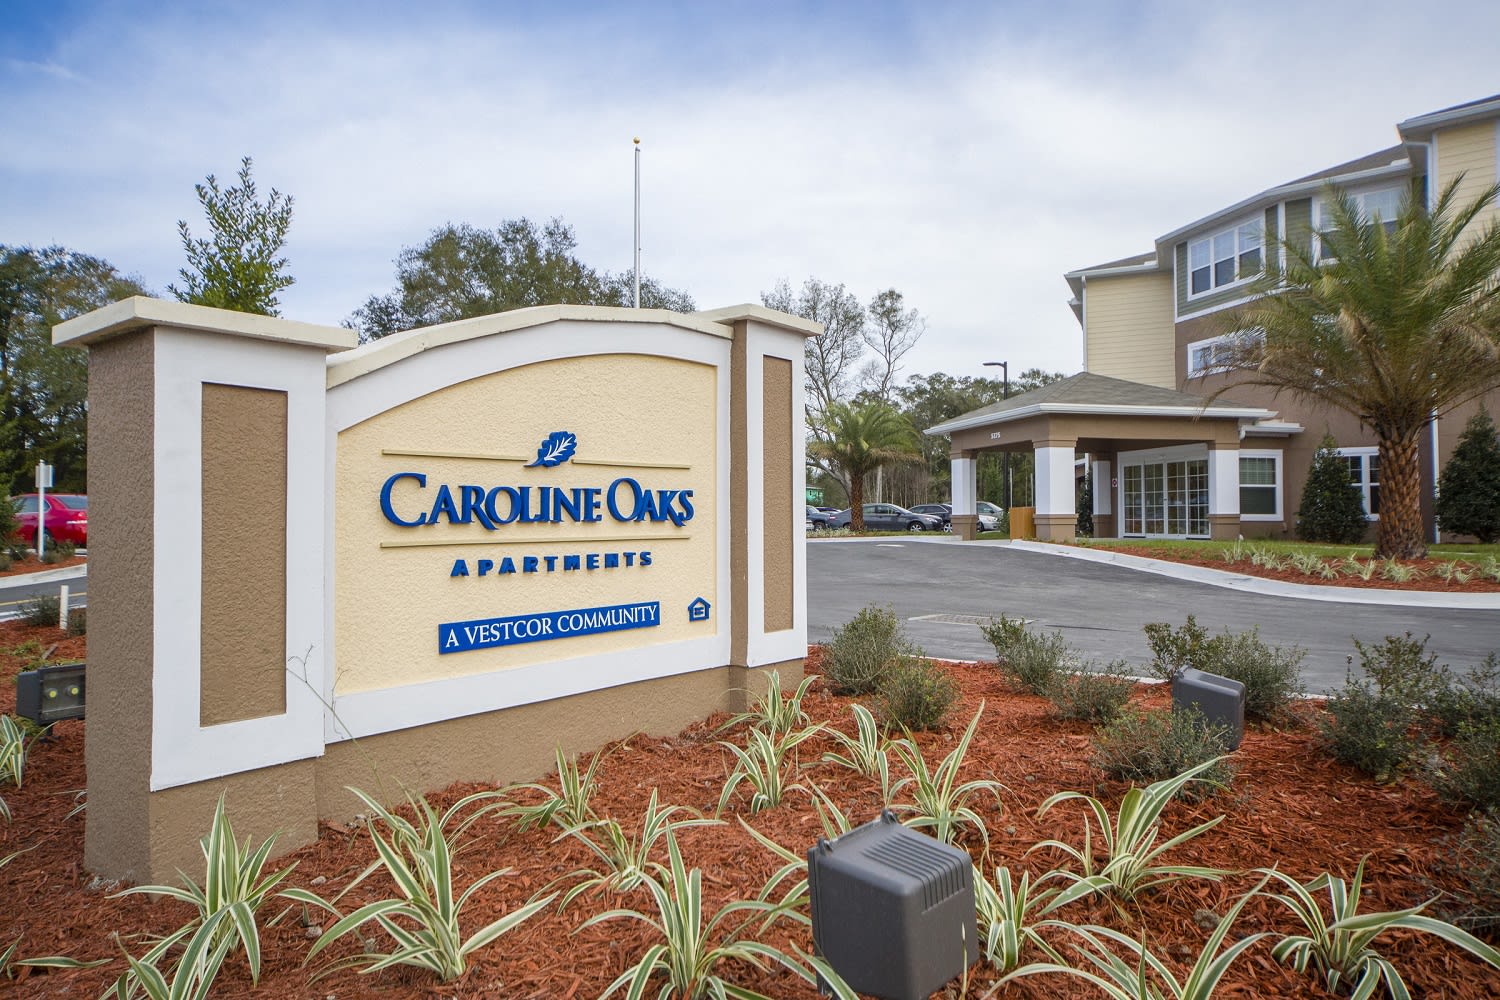 Caroline Oaks Apartments